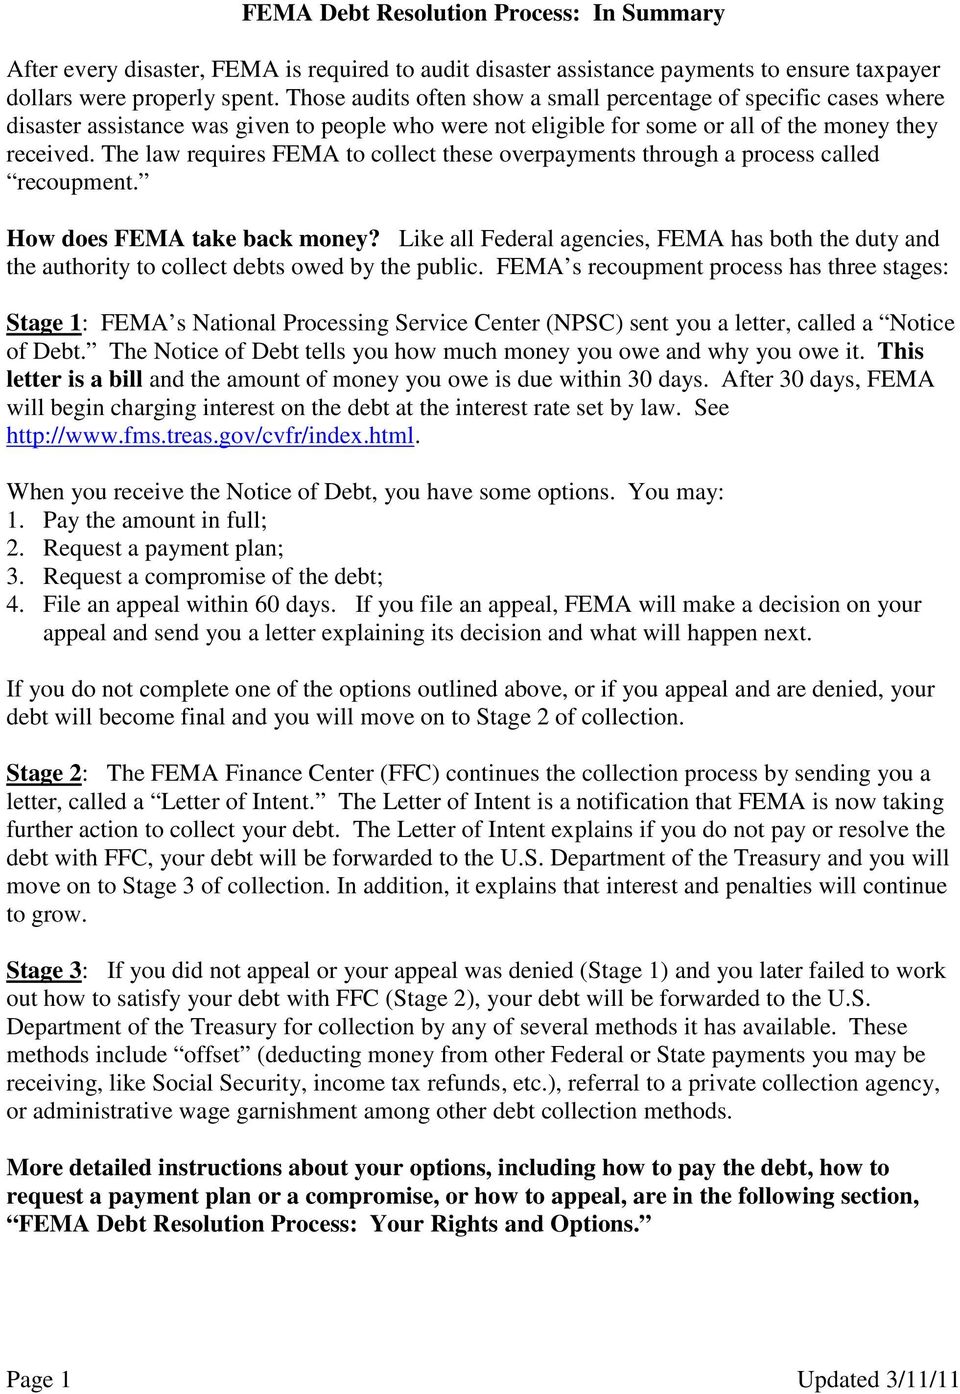 Fema Debt Resolution Process In Summary Pdf Free Download